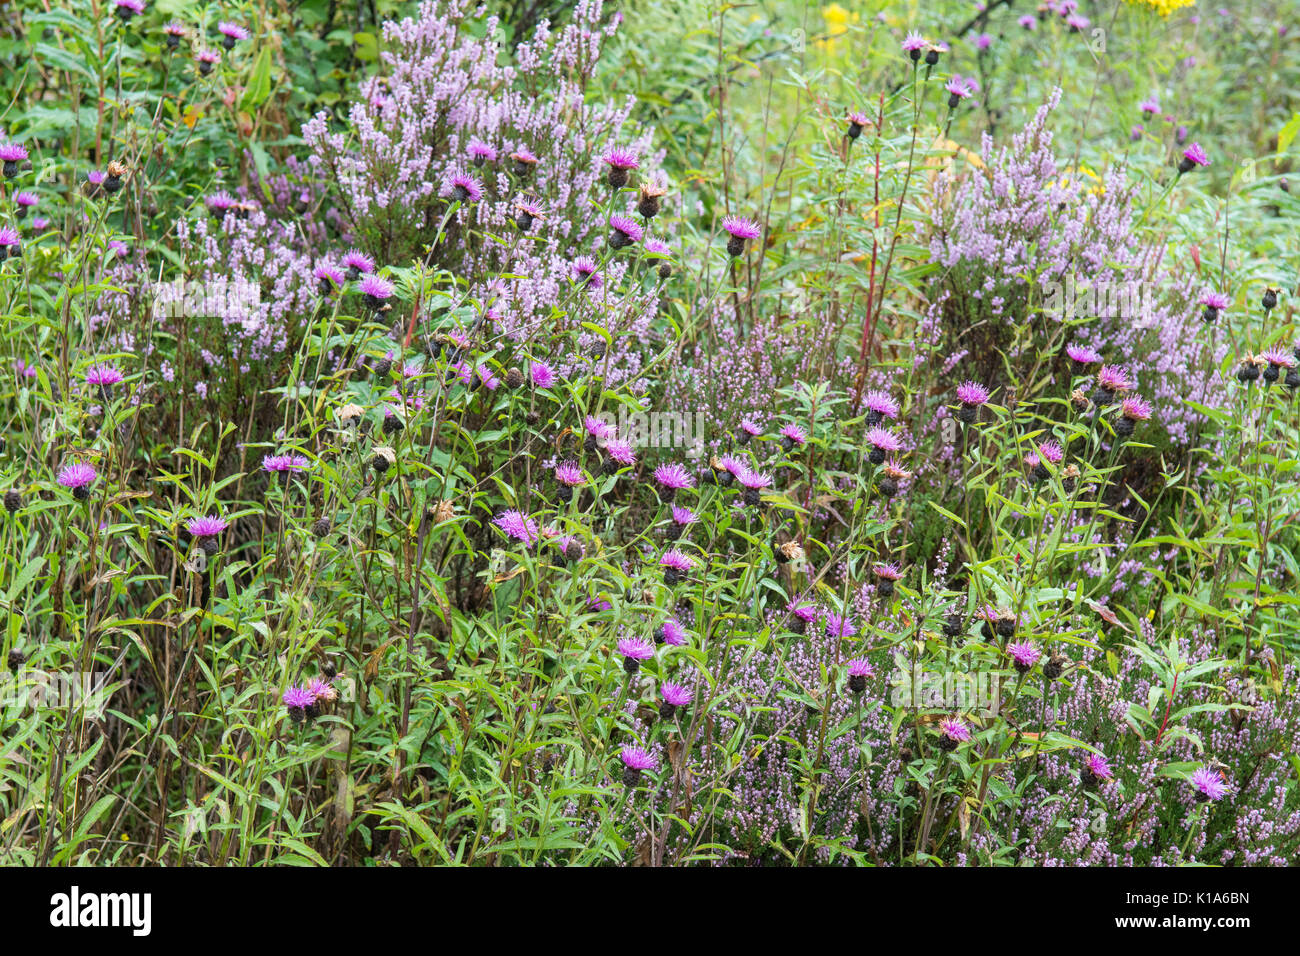 Scottish wildflowers - purple heather and common knapweed Stock Photo